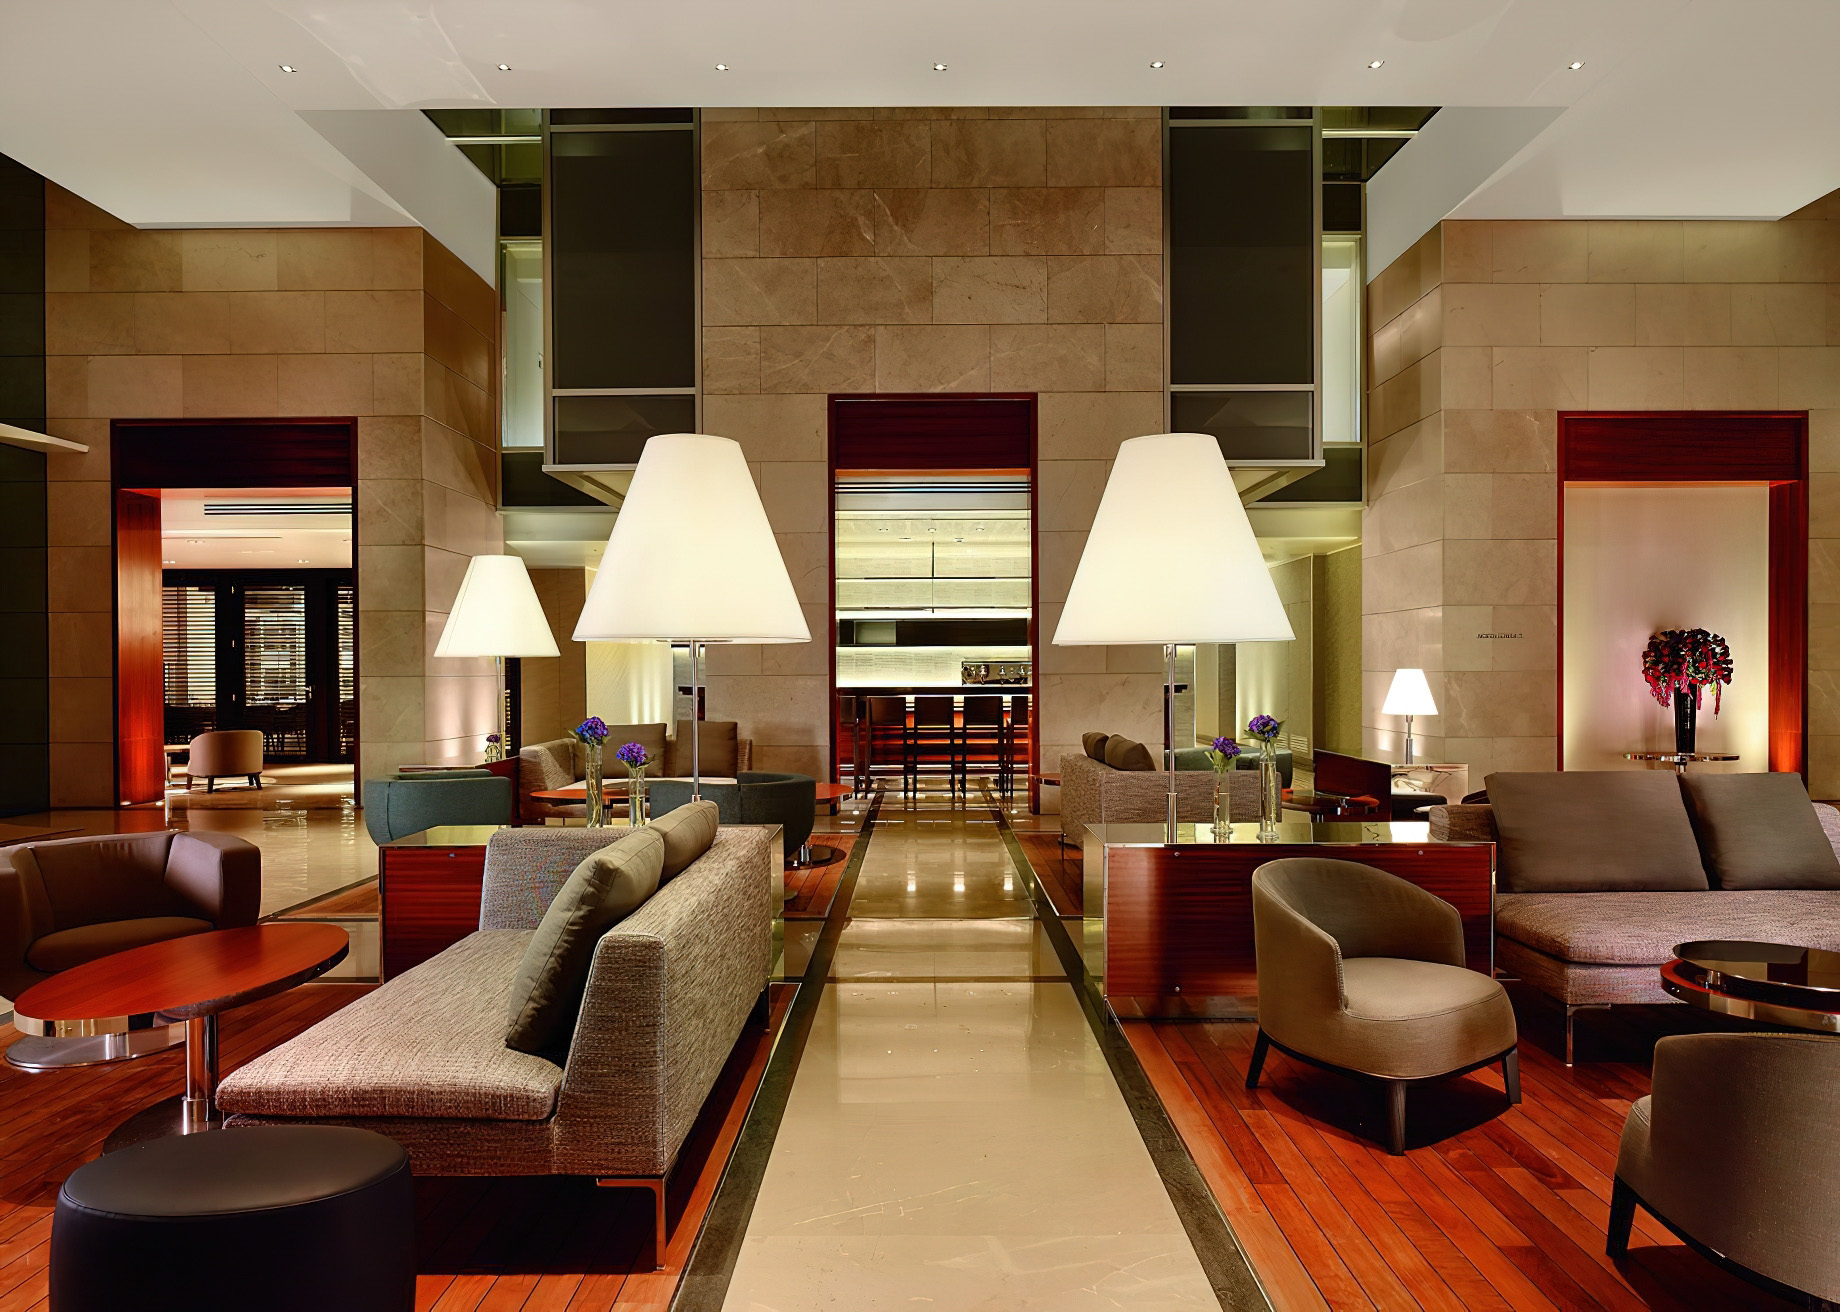 The Ritz-Carlton, Herzliya Hotel – Herzliya, Israel – Blends Lounge